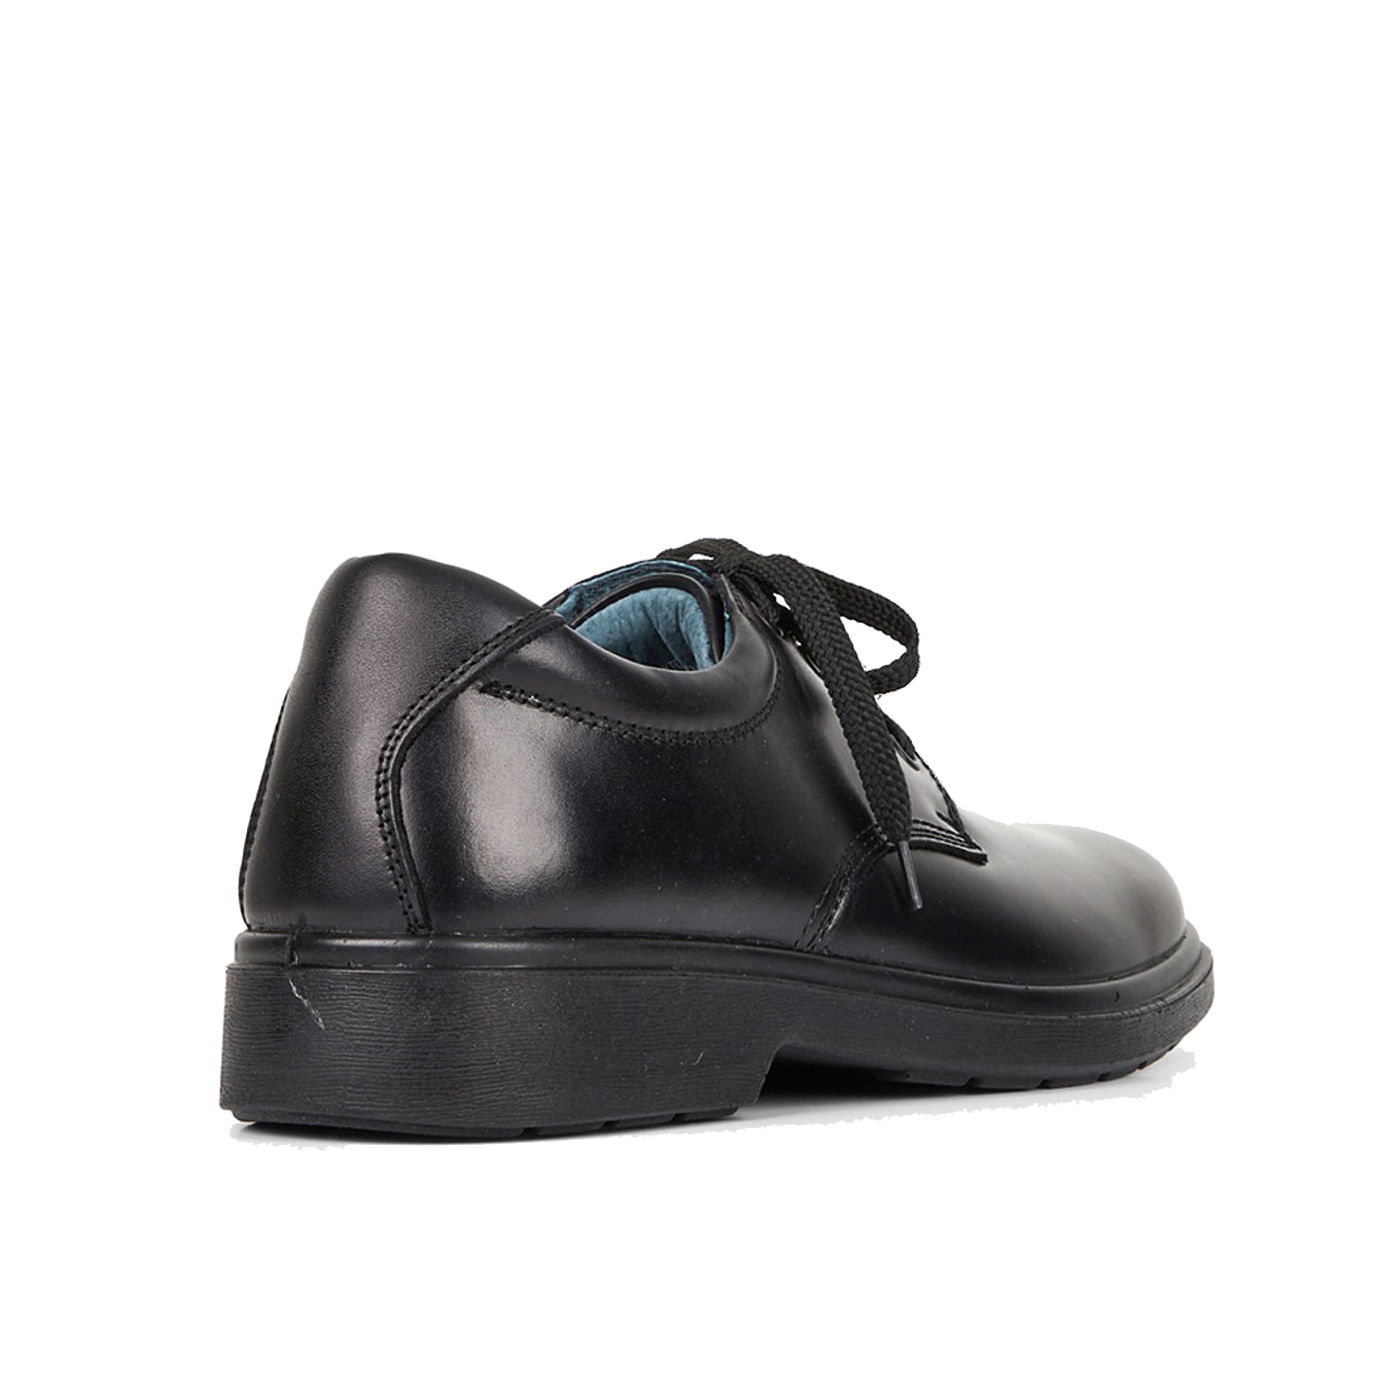 Clarks Leather School Shoes Black Daytona Senior